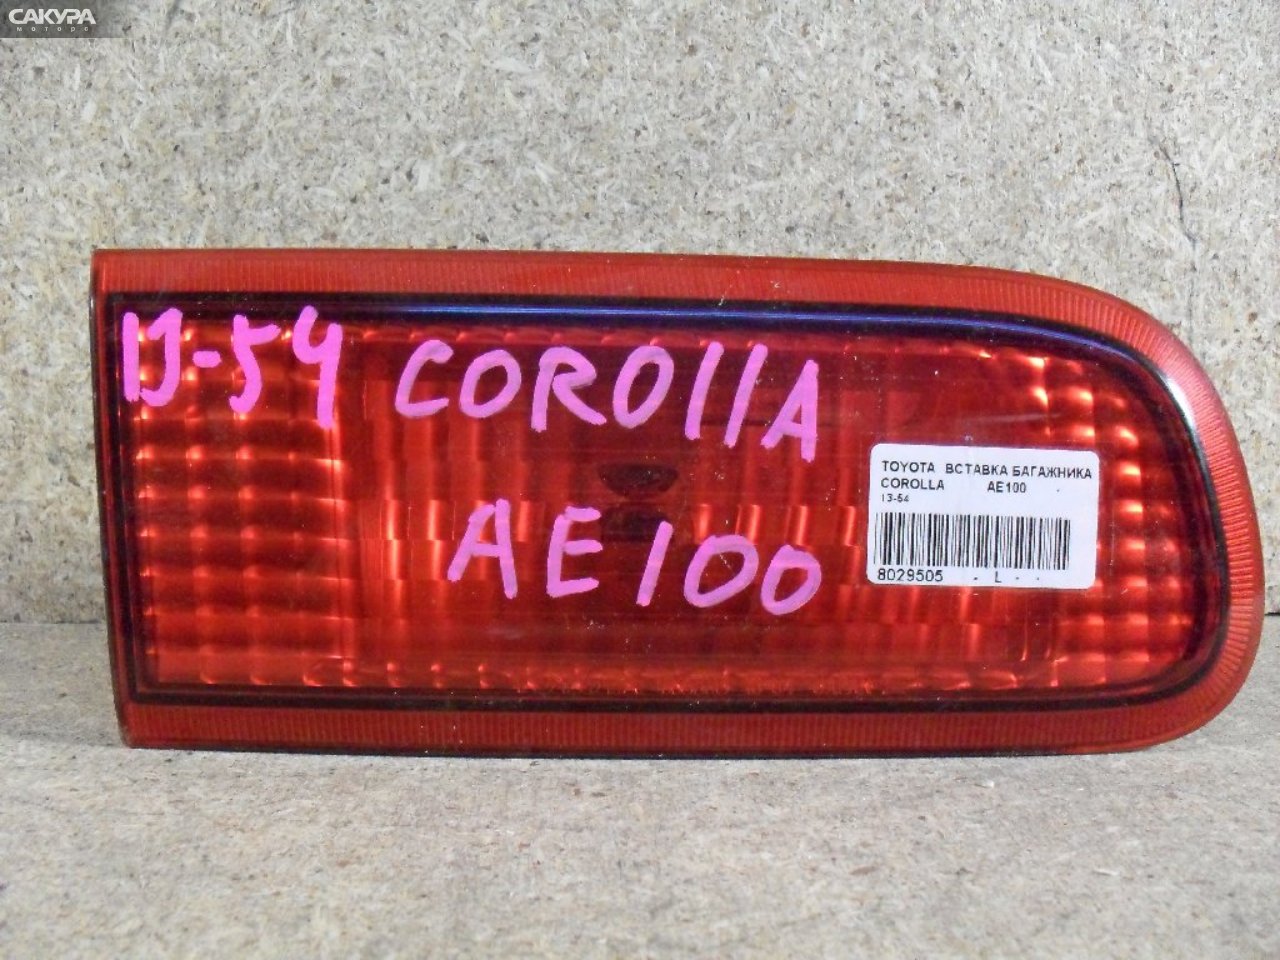 Фонарь вставка багажника левый Toyota Corolla AE100 13-54: купить в Сакура Абакан.